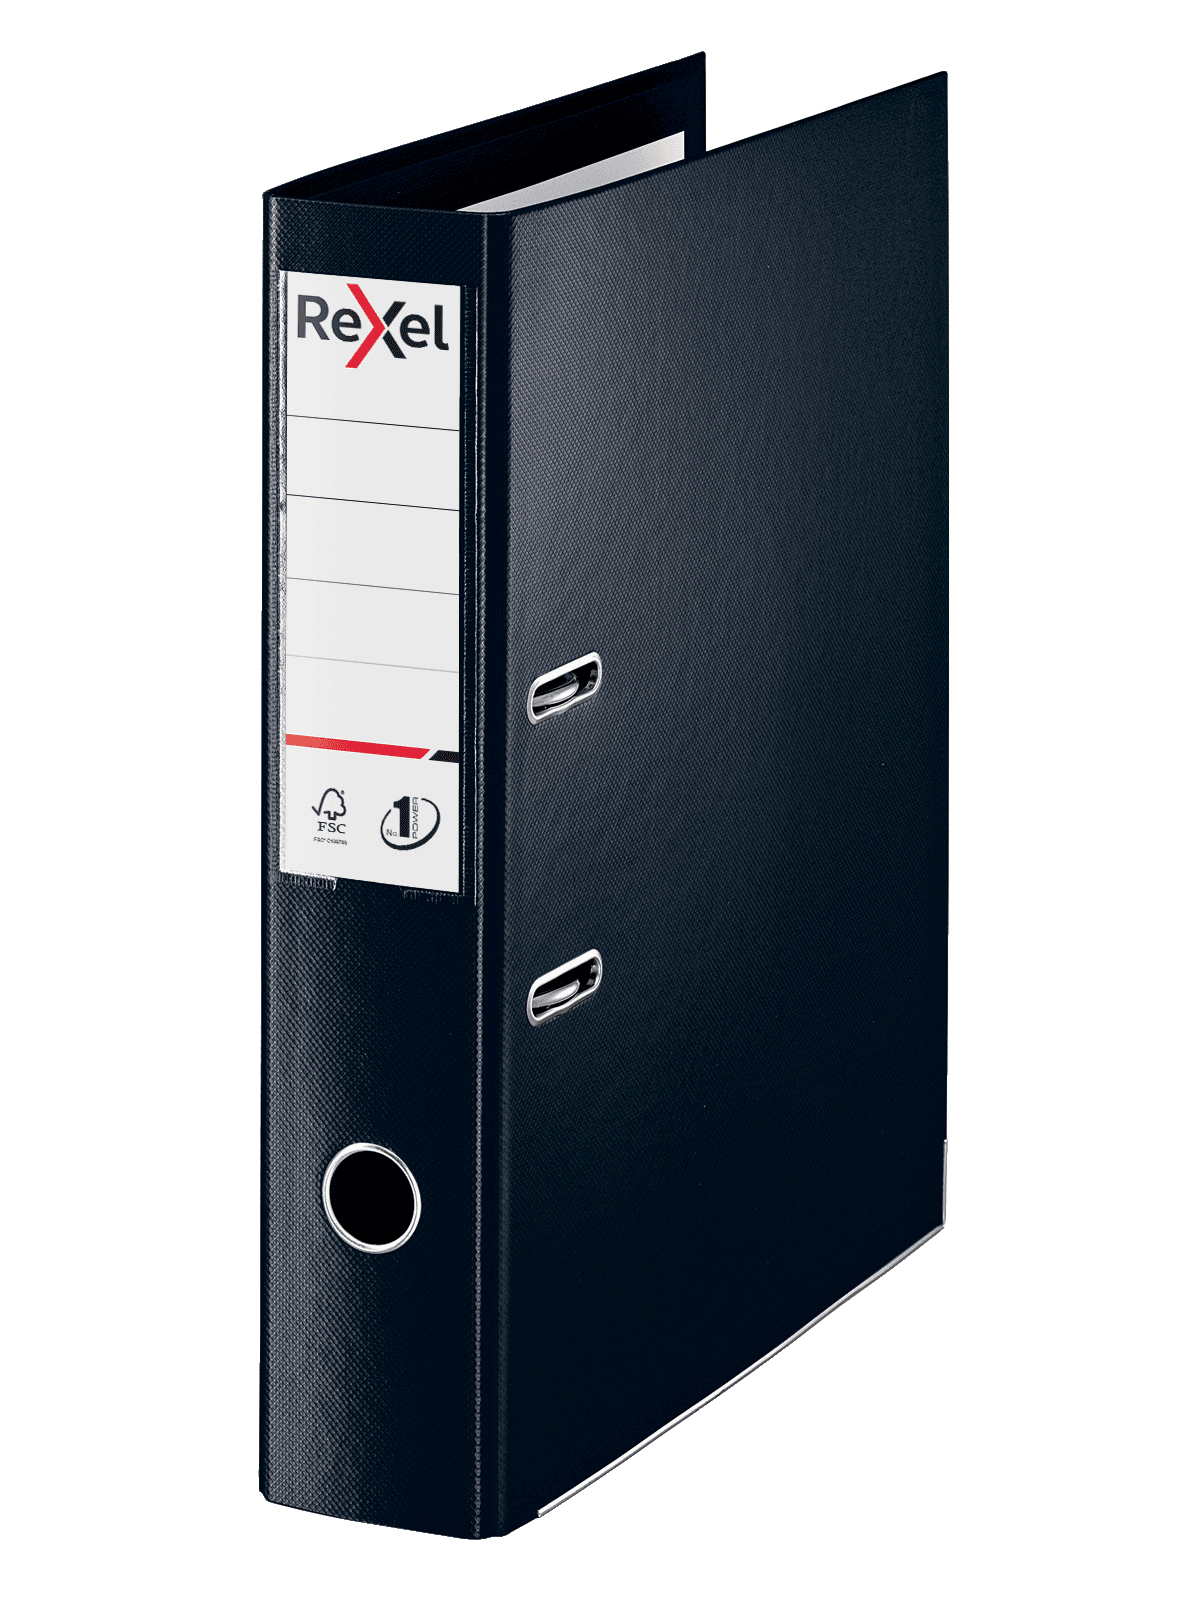 Rexel Choices 75mm Lever Arch File Polypropylene Foolscap Black 2115511